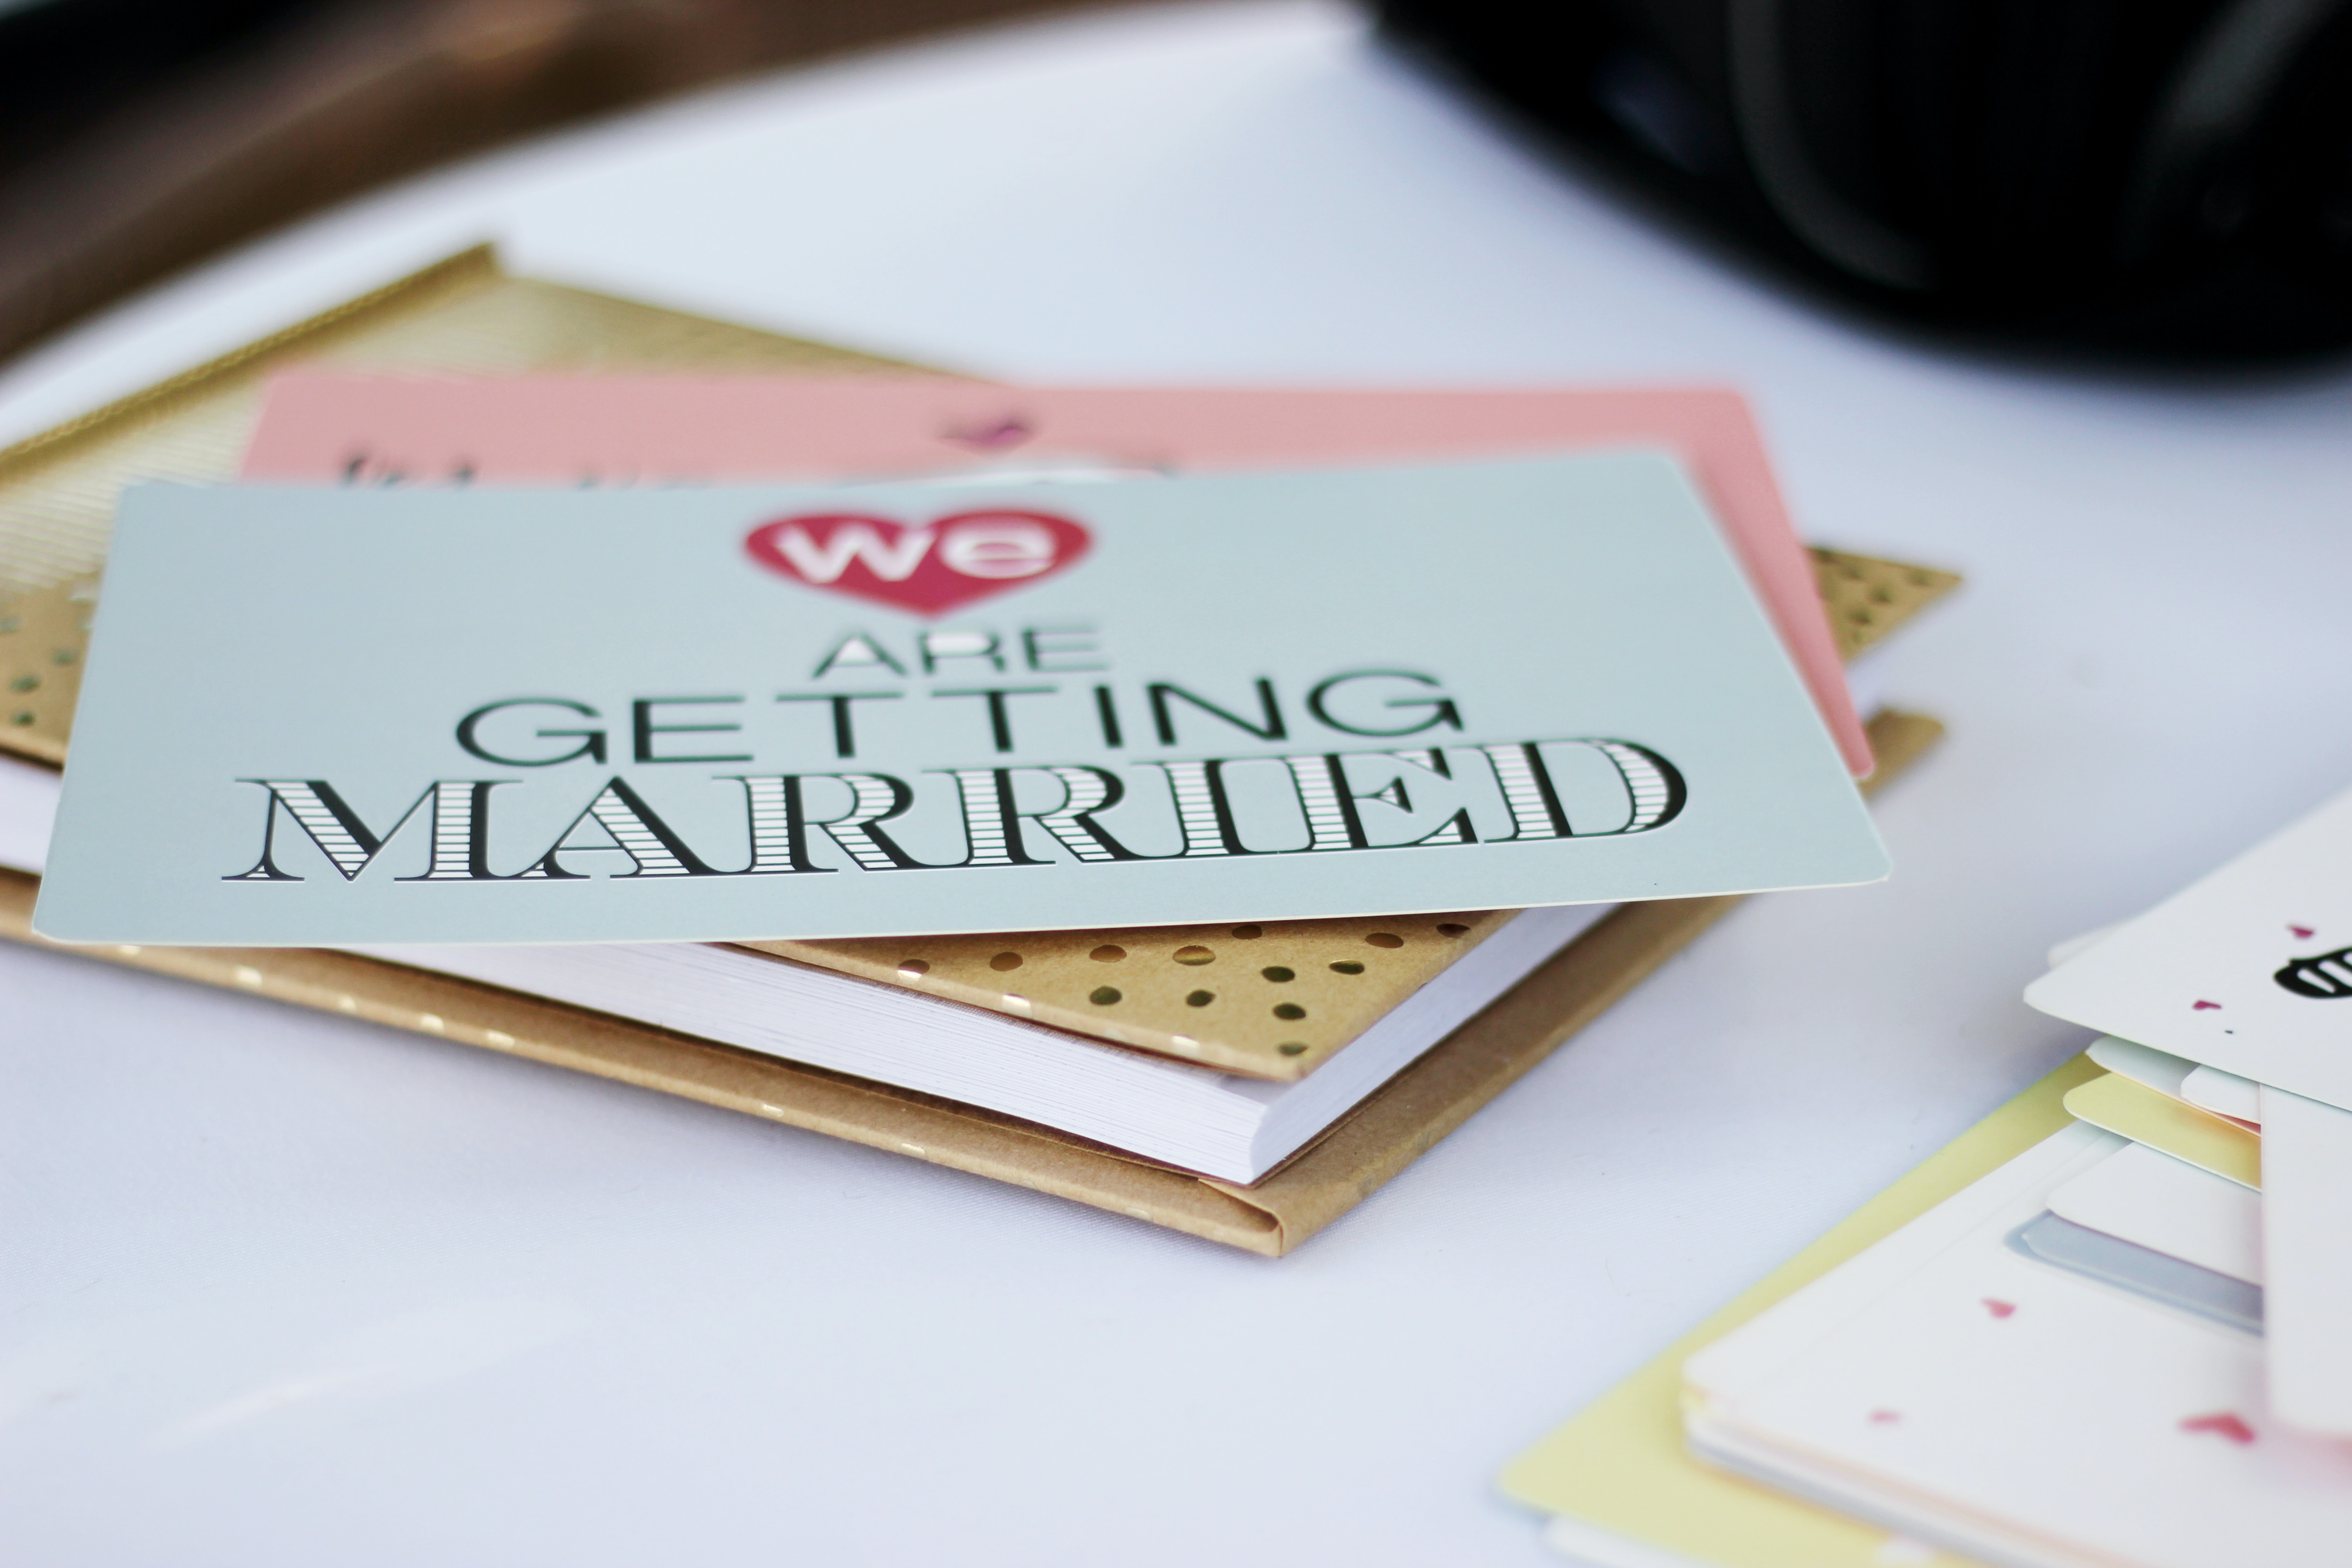 wedding invatation card